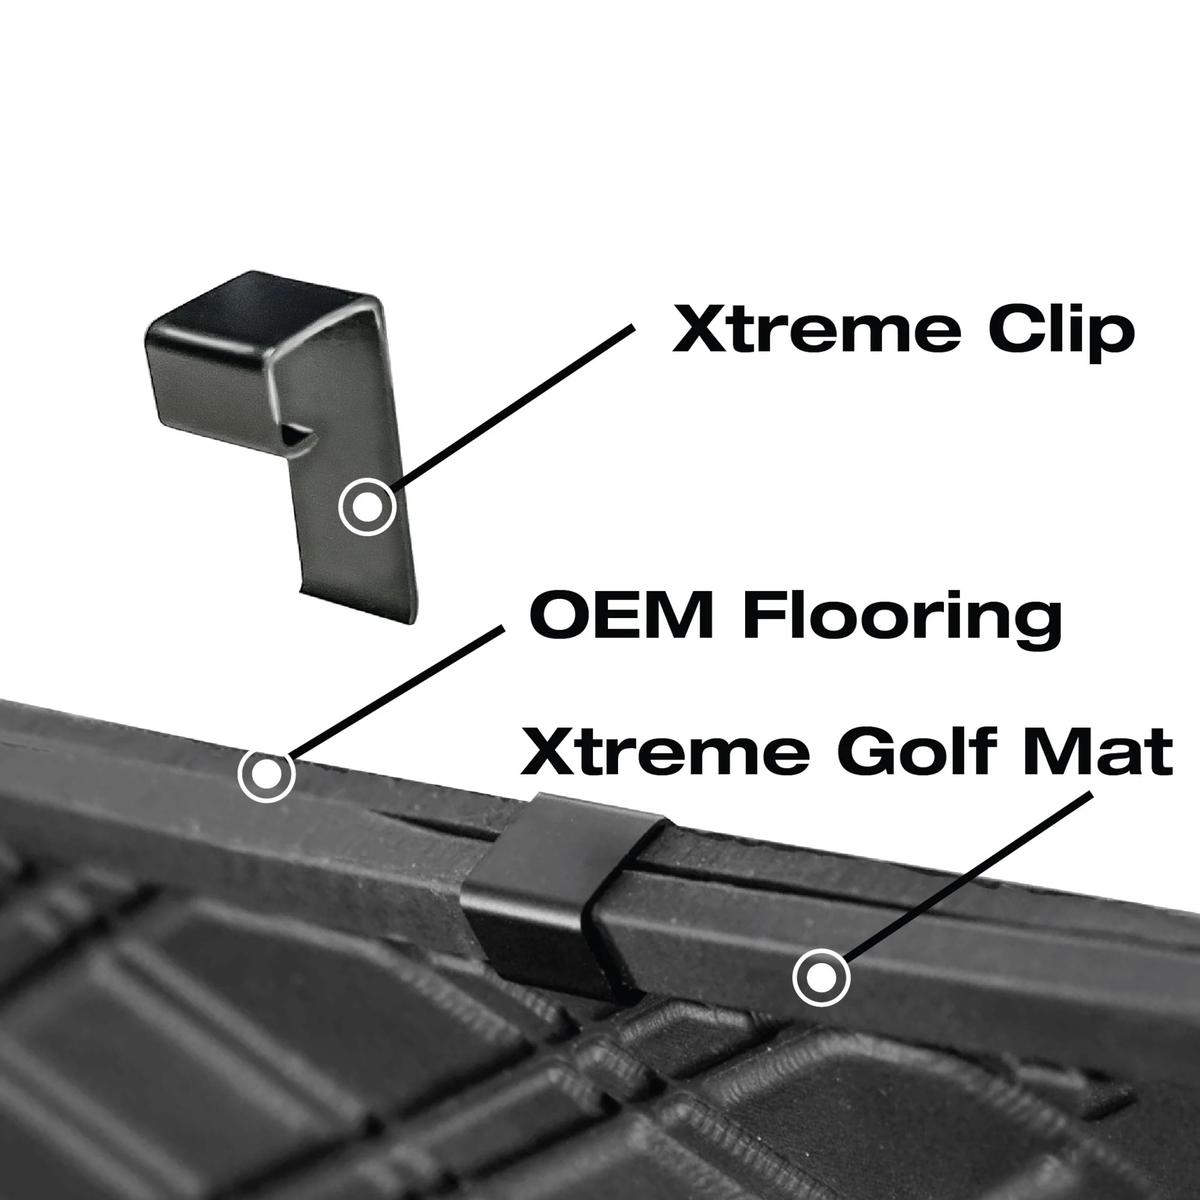 Xtreme Floor Mats for Yamaha UMAX Rally / Drive2 QuieTech EFI 2007-Up - Black/Grey